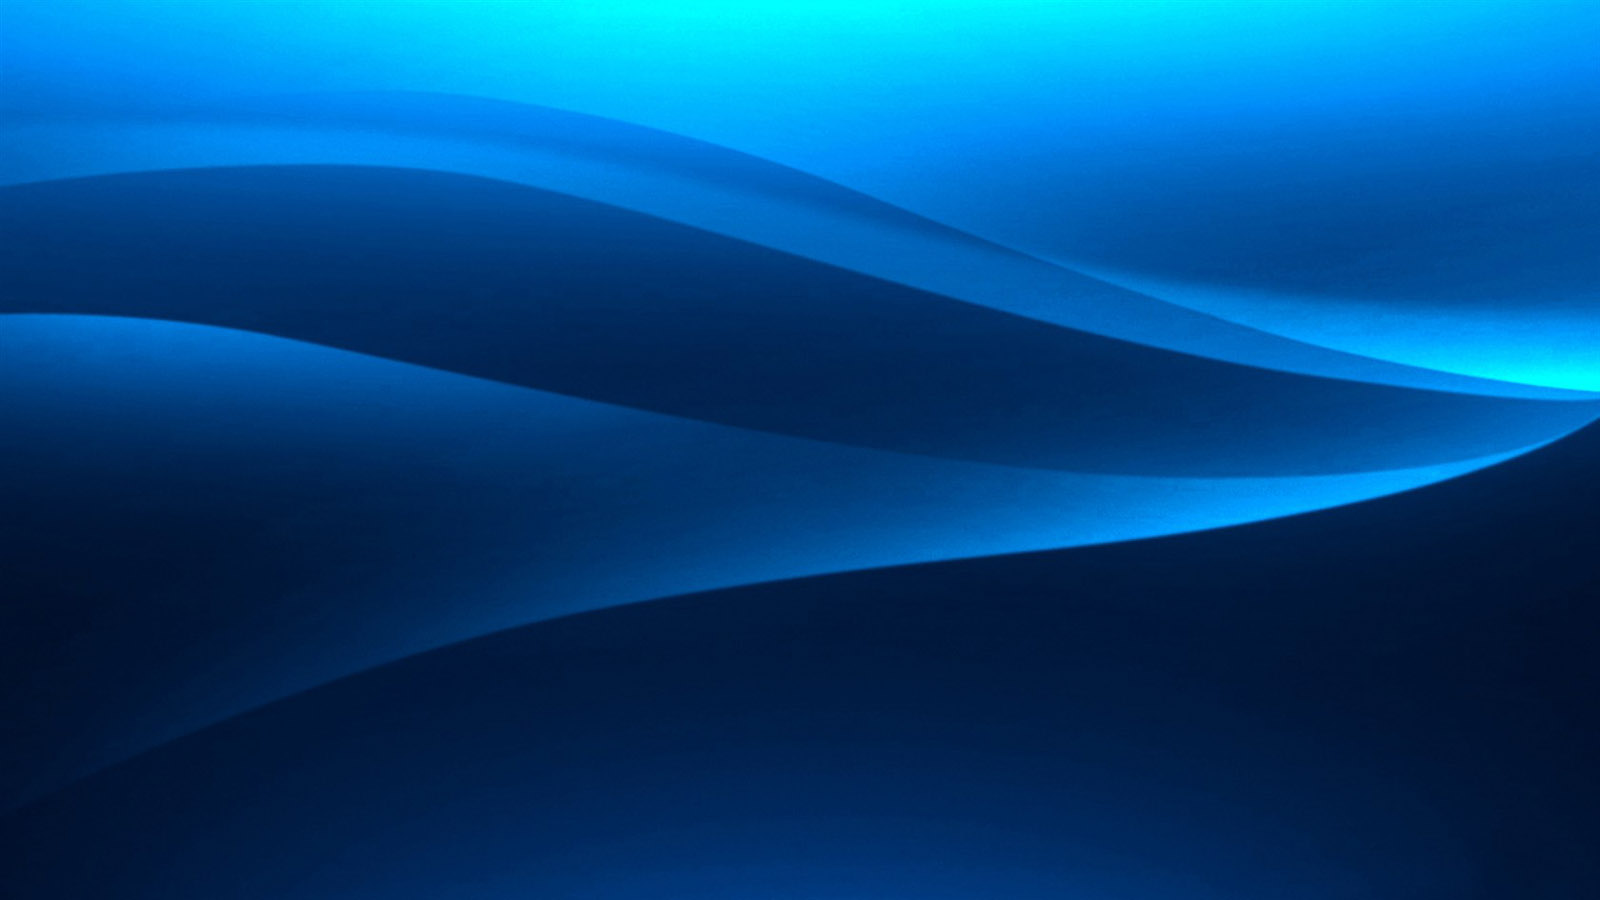 Blue computer desktop background